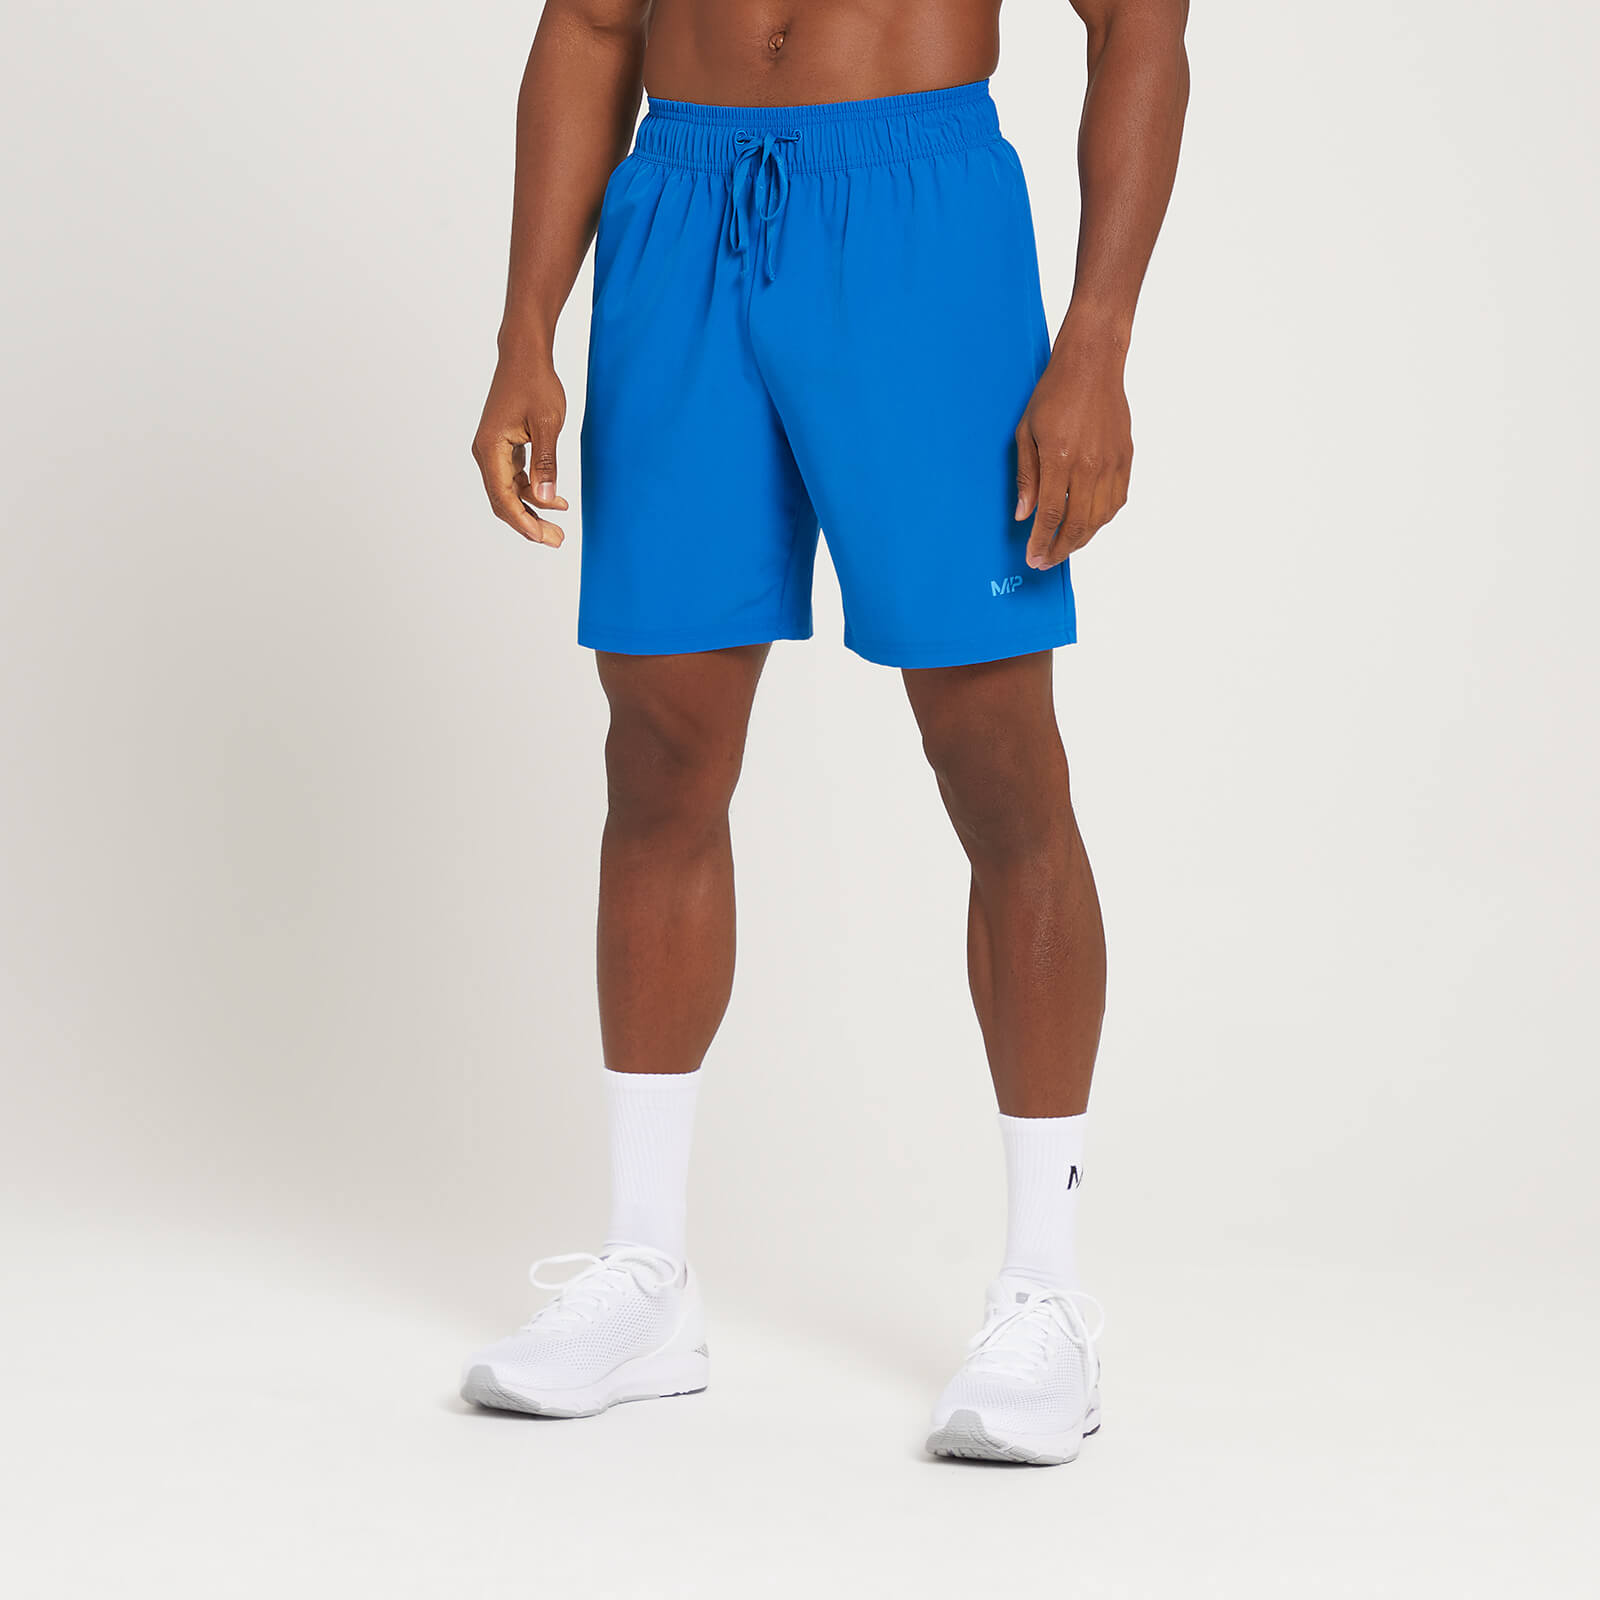 MP Men's Linear Mark Graphic Training Shorts - True Blue - XS